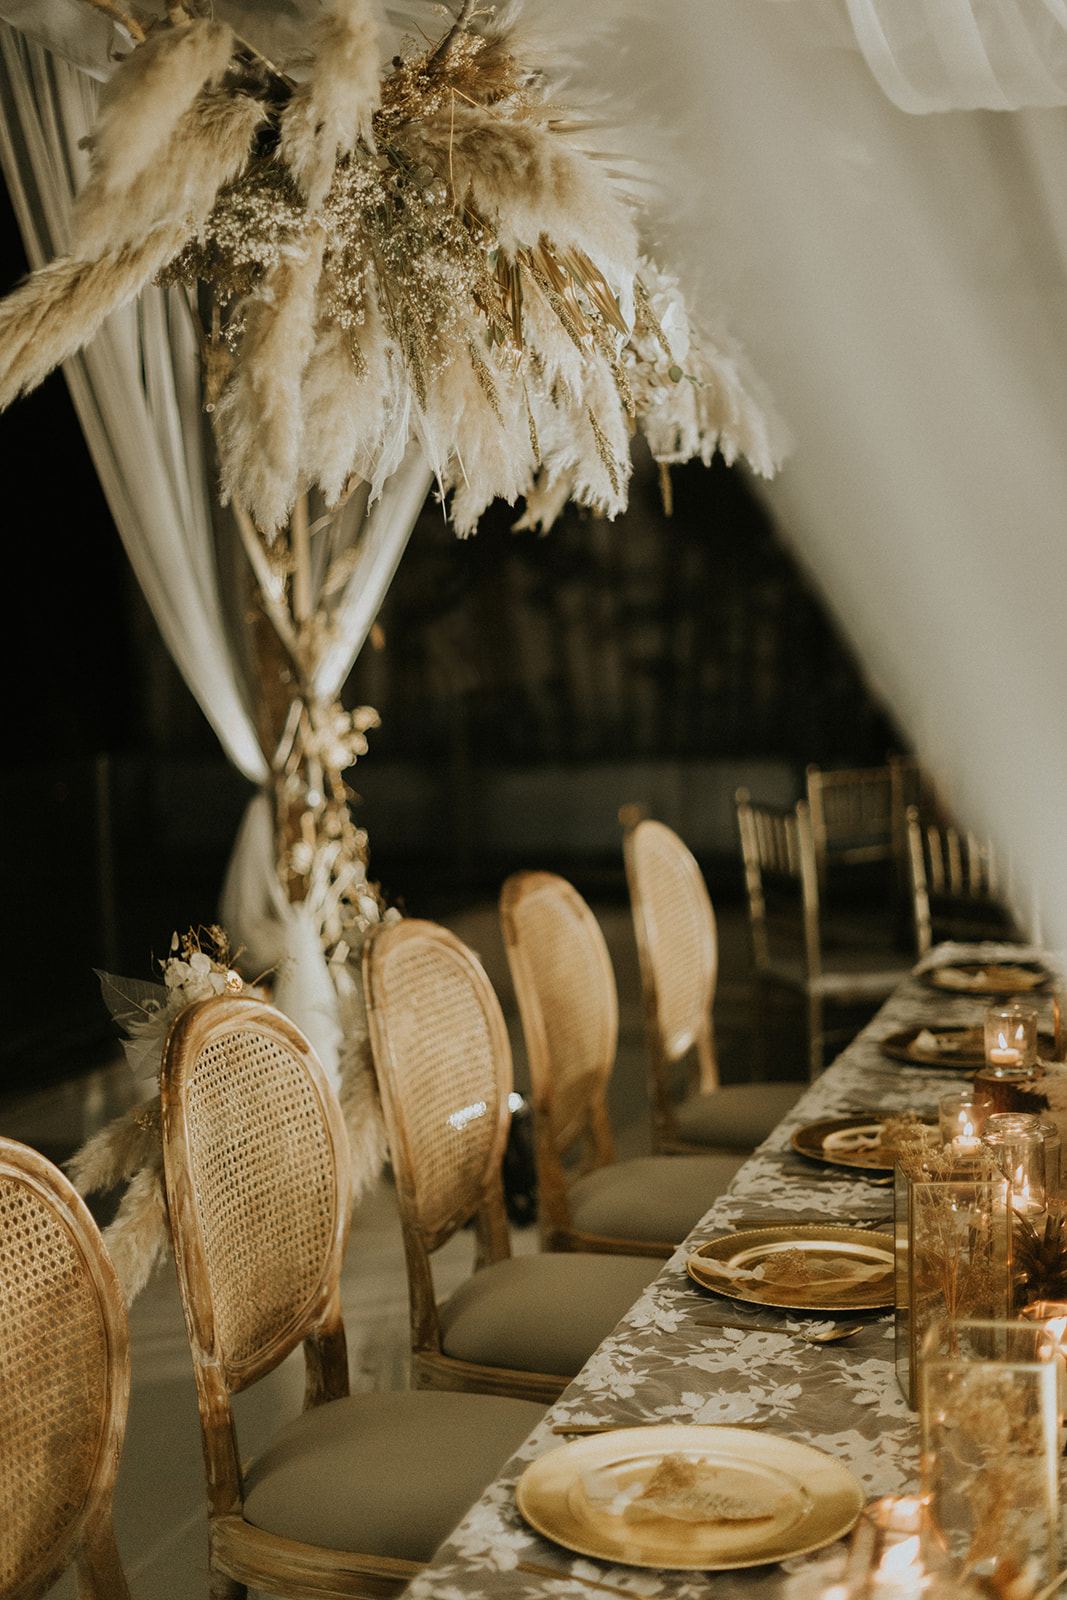 Rustic glamorous wedding theme that radiates warmth and elegance.